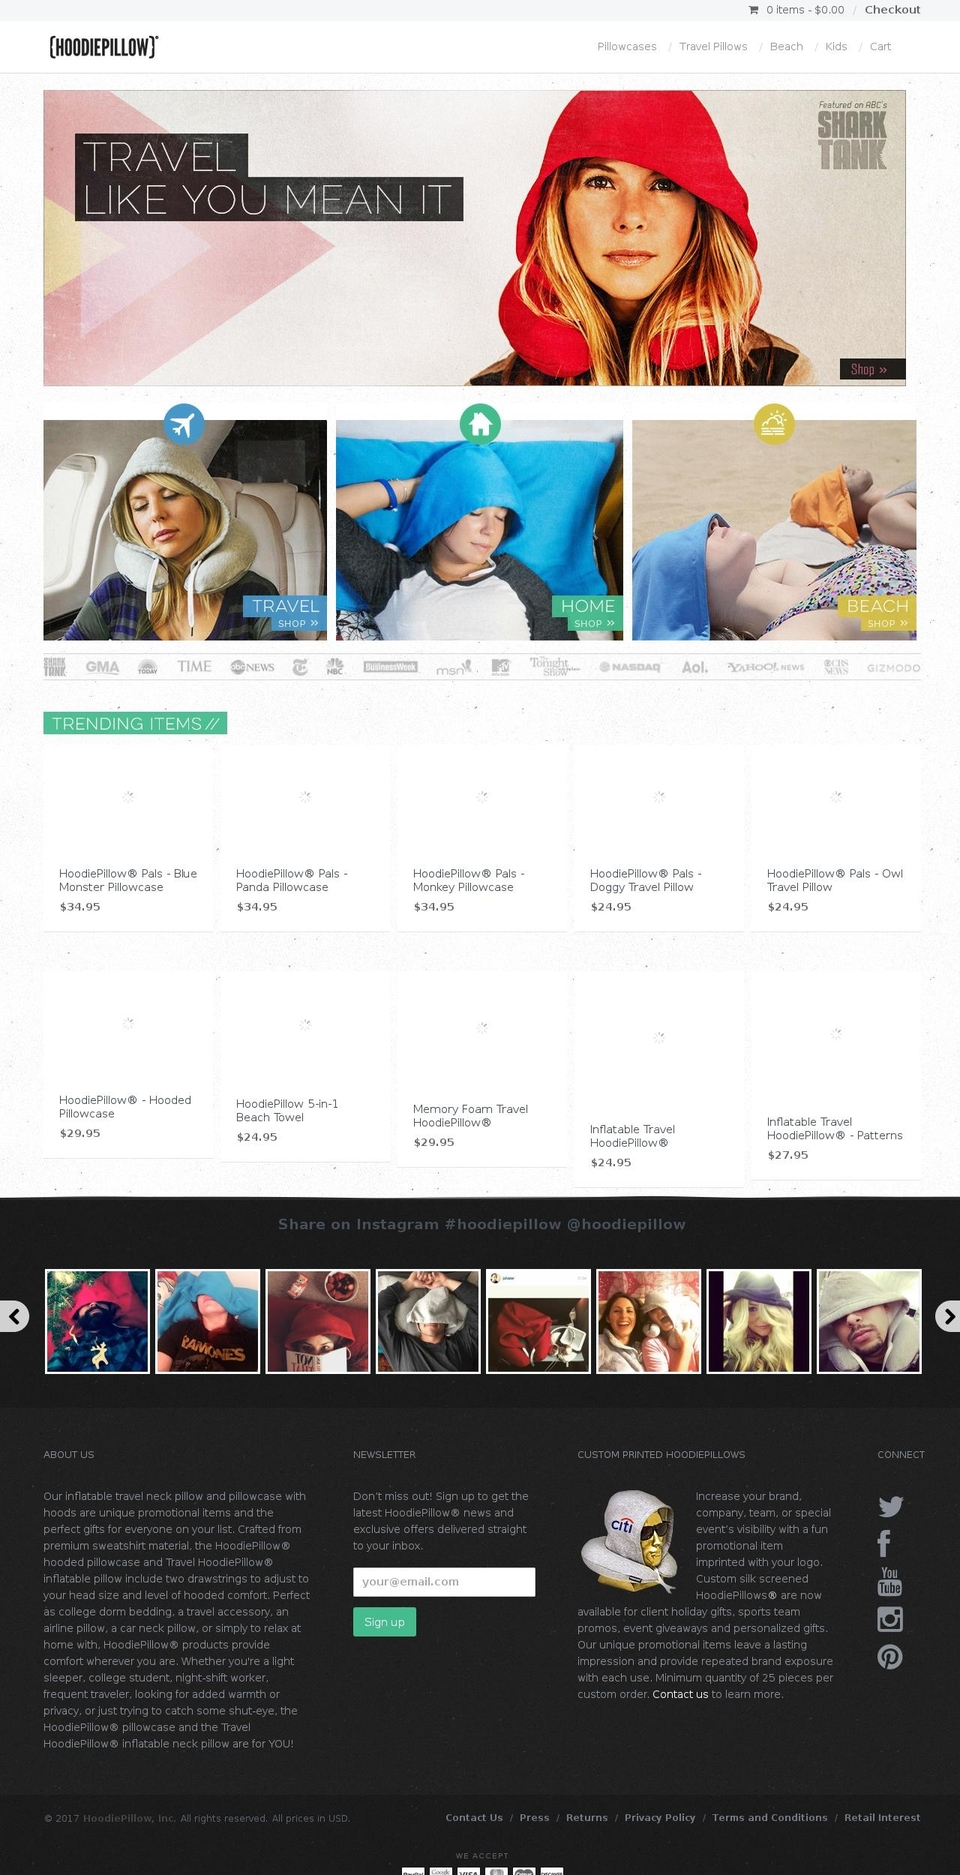 pillowhoodie.co shopify website screenshot